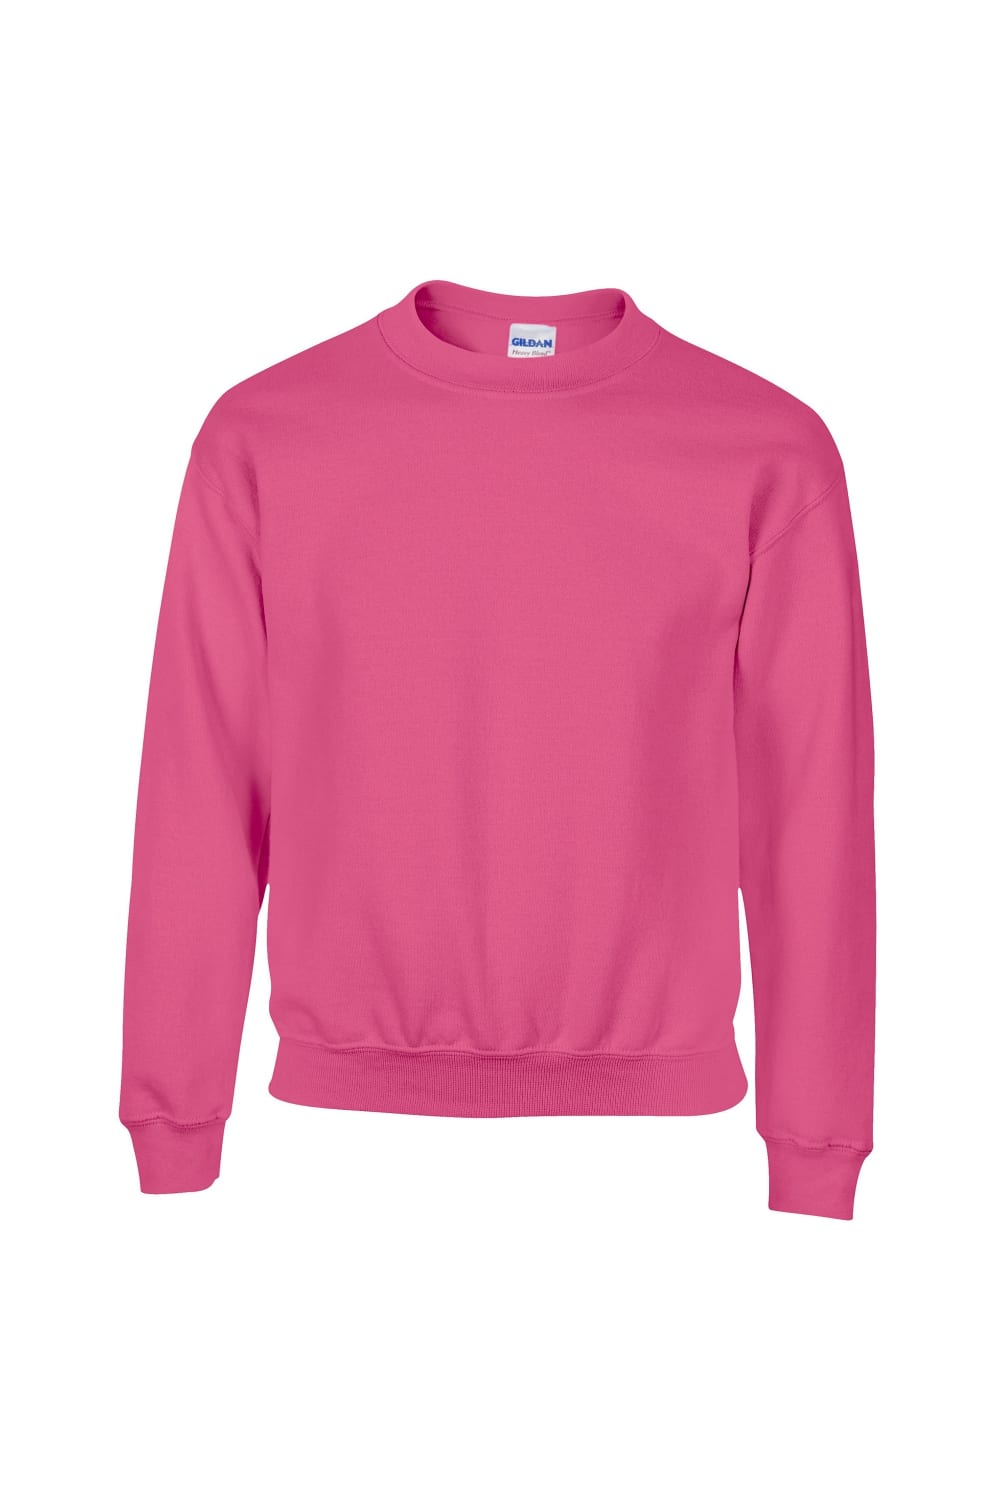 Gildan Childrens Big Boys Heavy Blend Crewneck Sweatshirt (Safety Pink)